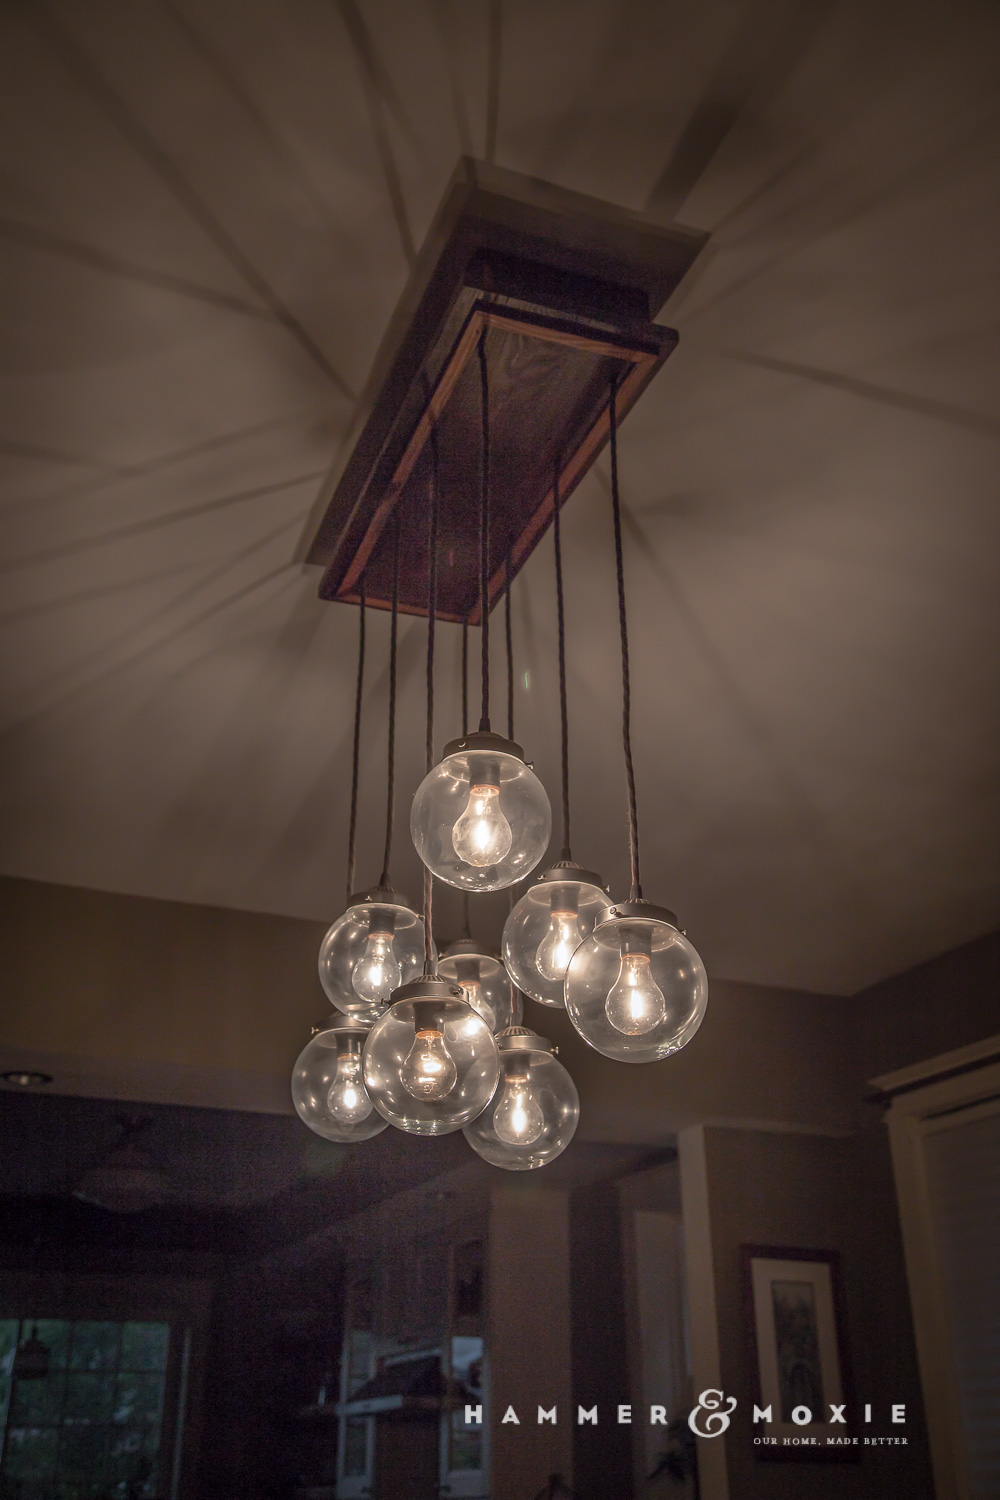 Homemade chandelier.